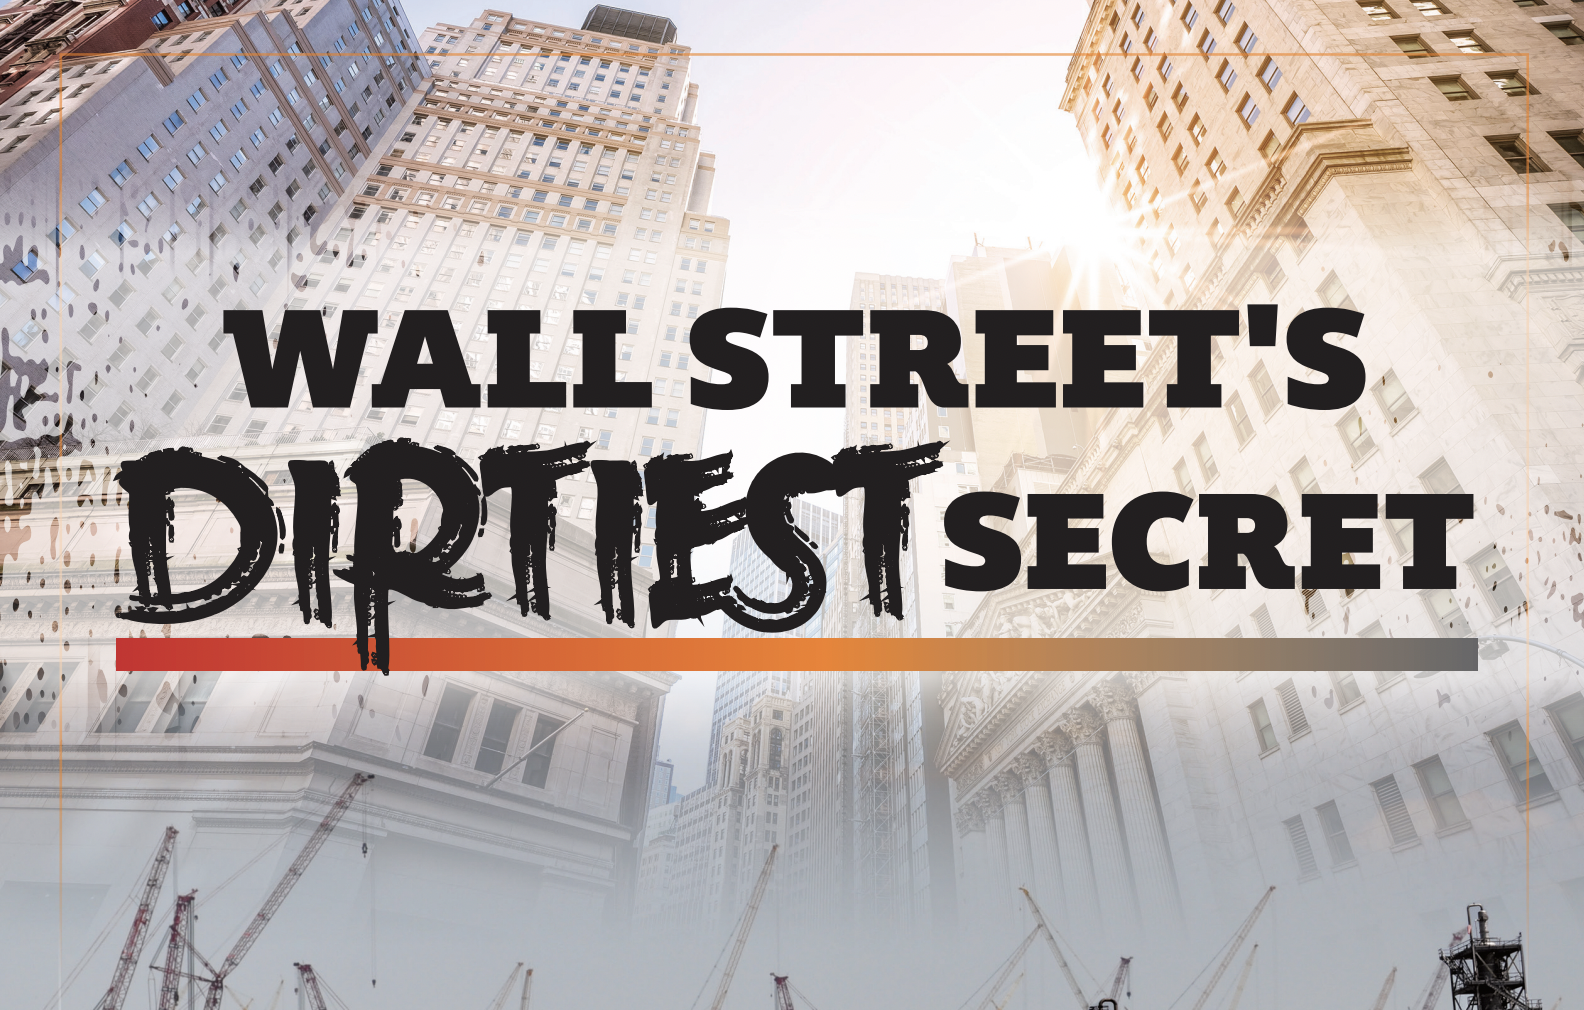 striking text against tall building on Wall Street say 'wall street's dirtiest secret'